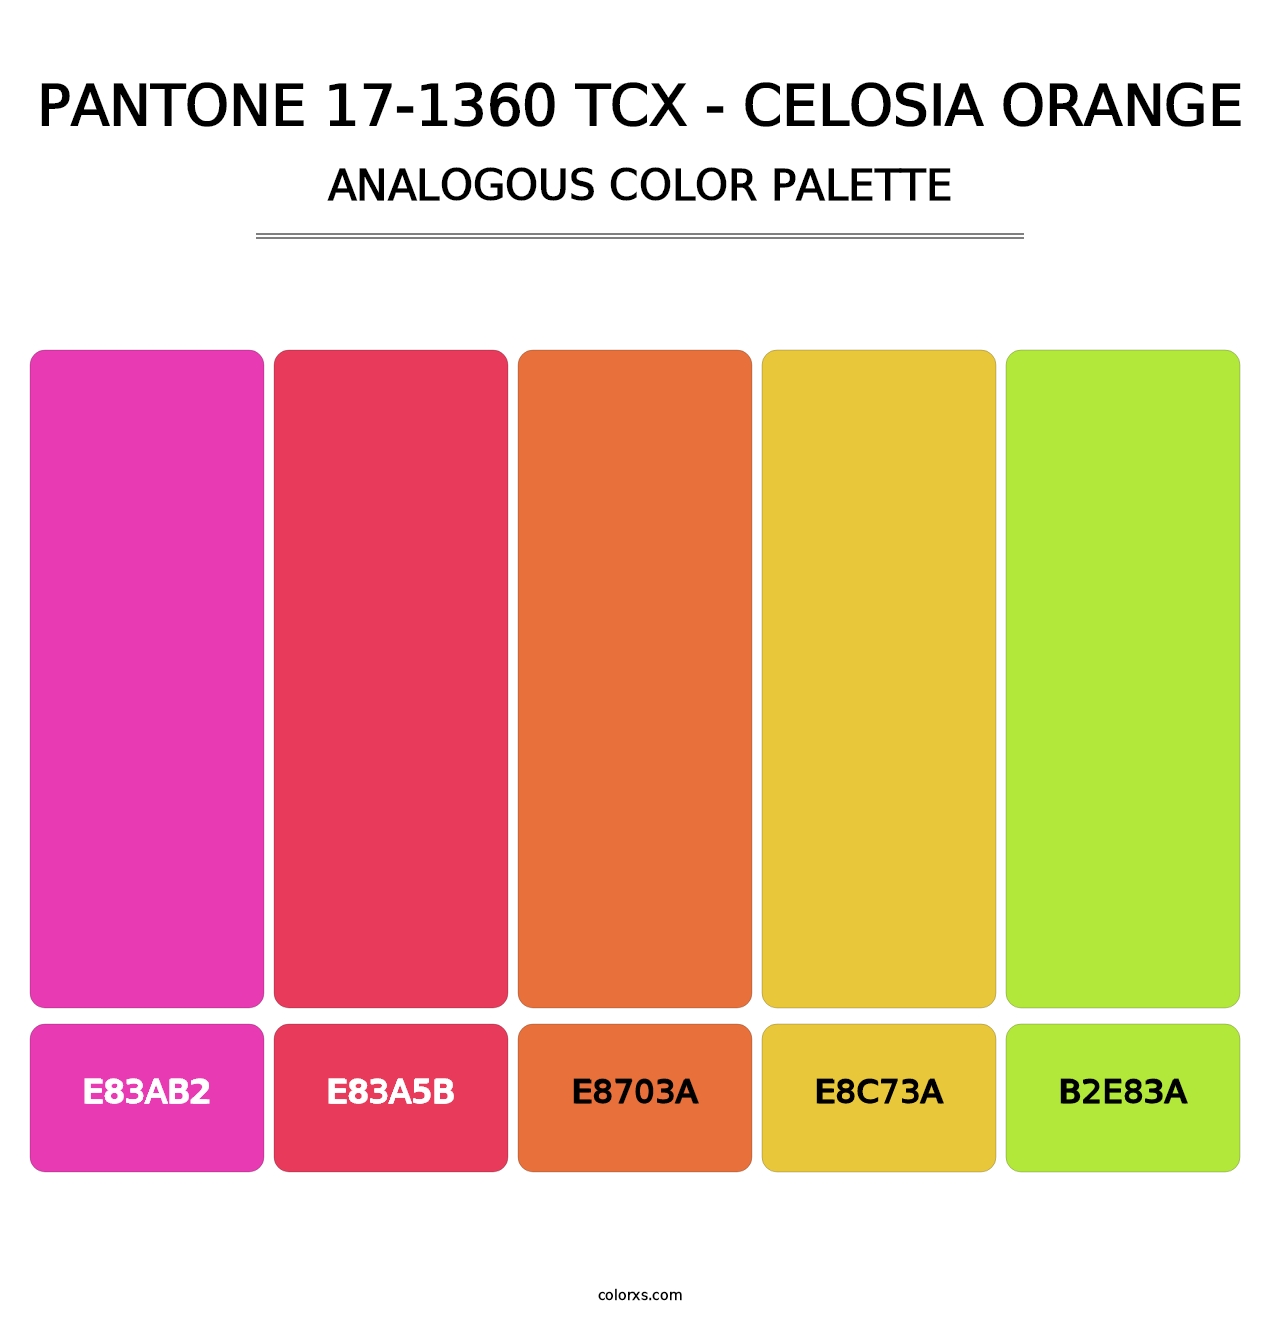 PANTONE 17-1360 TCX - Celosia Orange - Analogous Color Palette